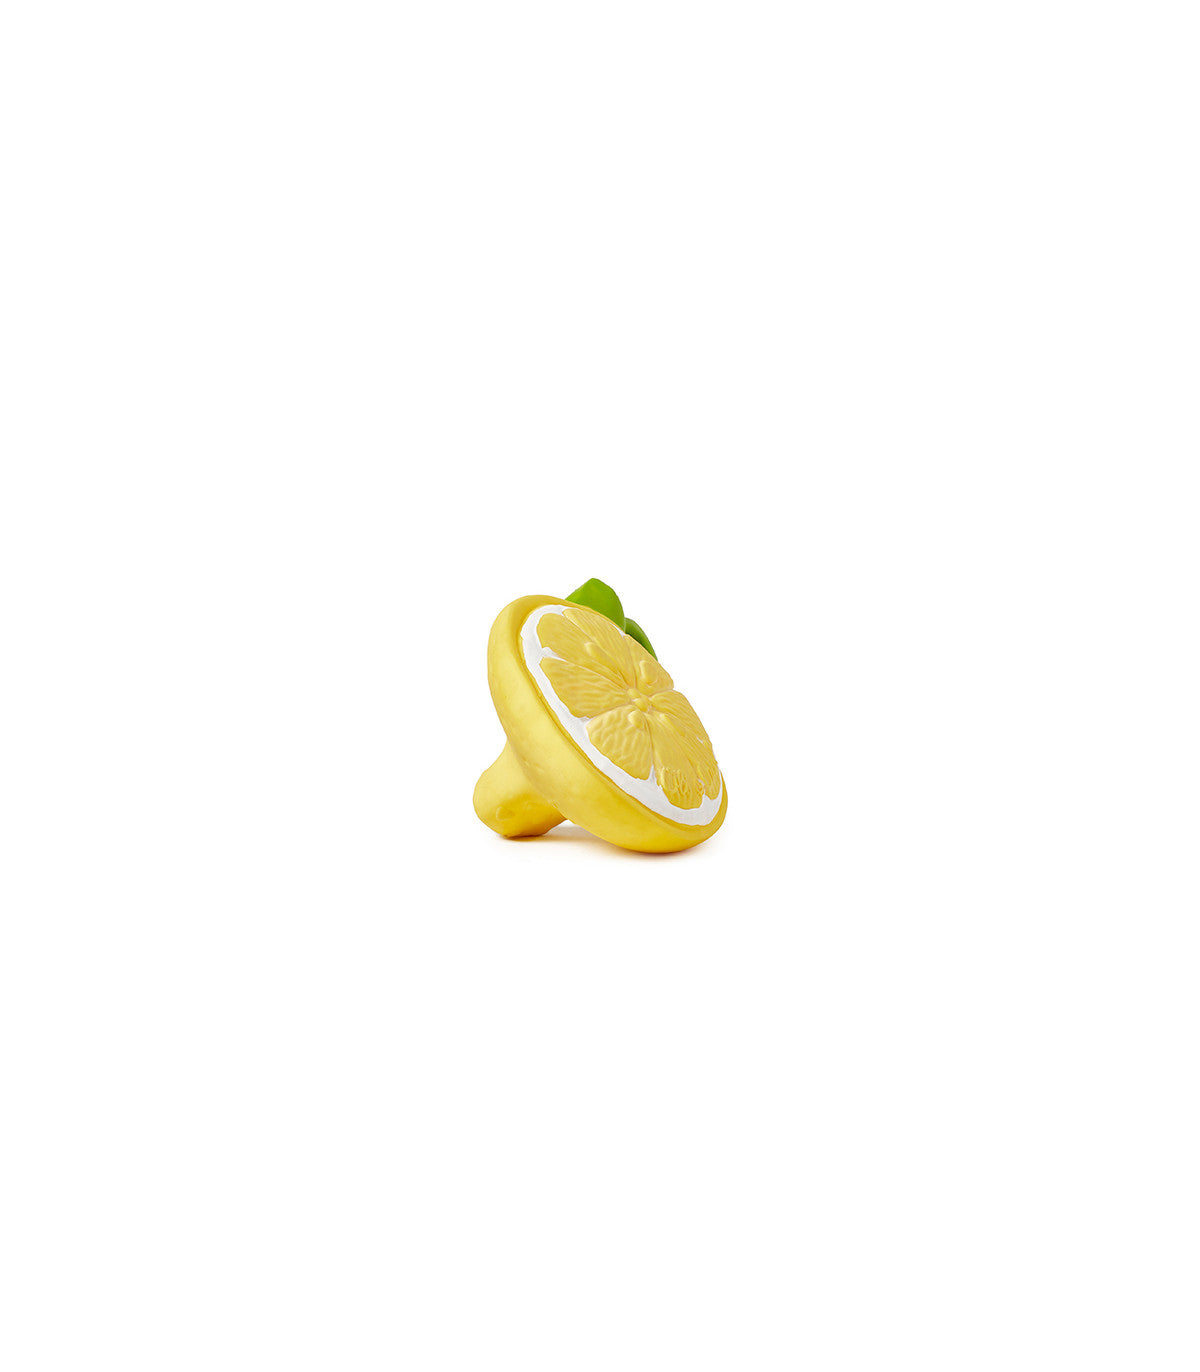 Mordedor Limón: John, the lemon